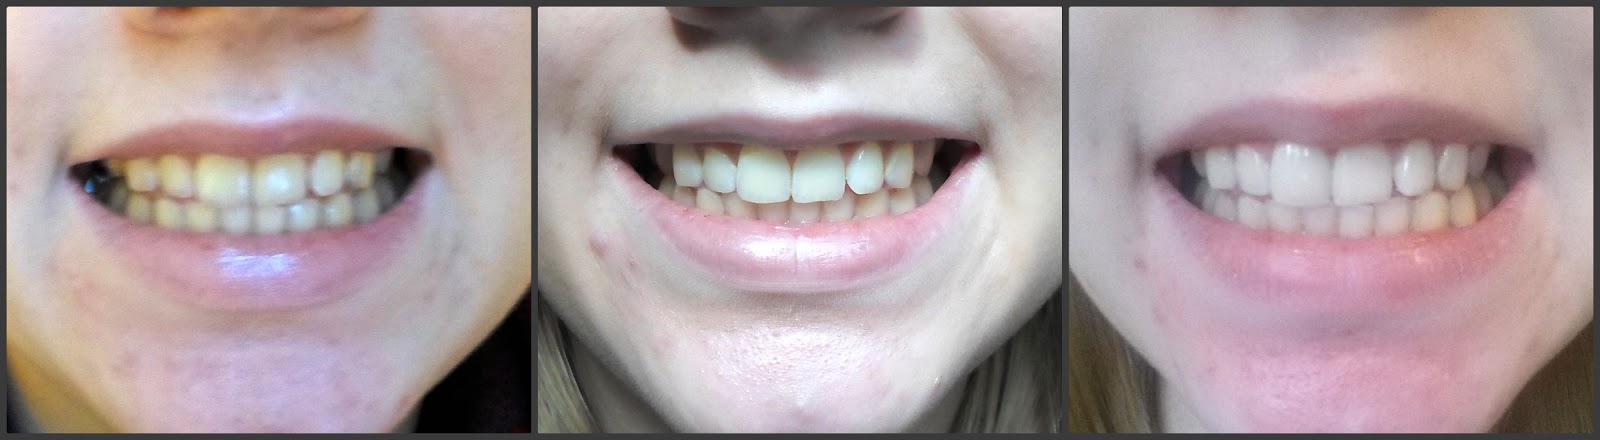 teeth-treat-how-to-use-crest-white-strips-brush-teeth